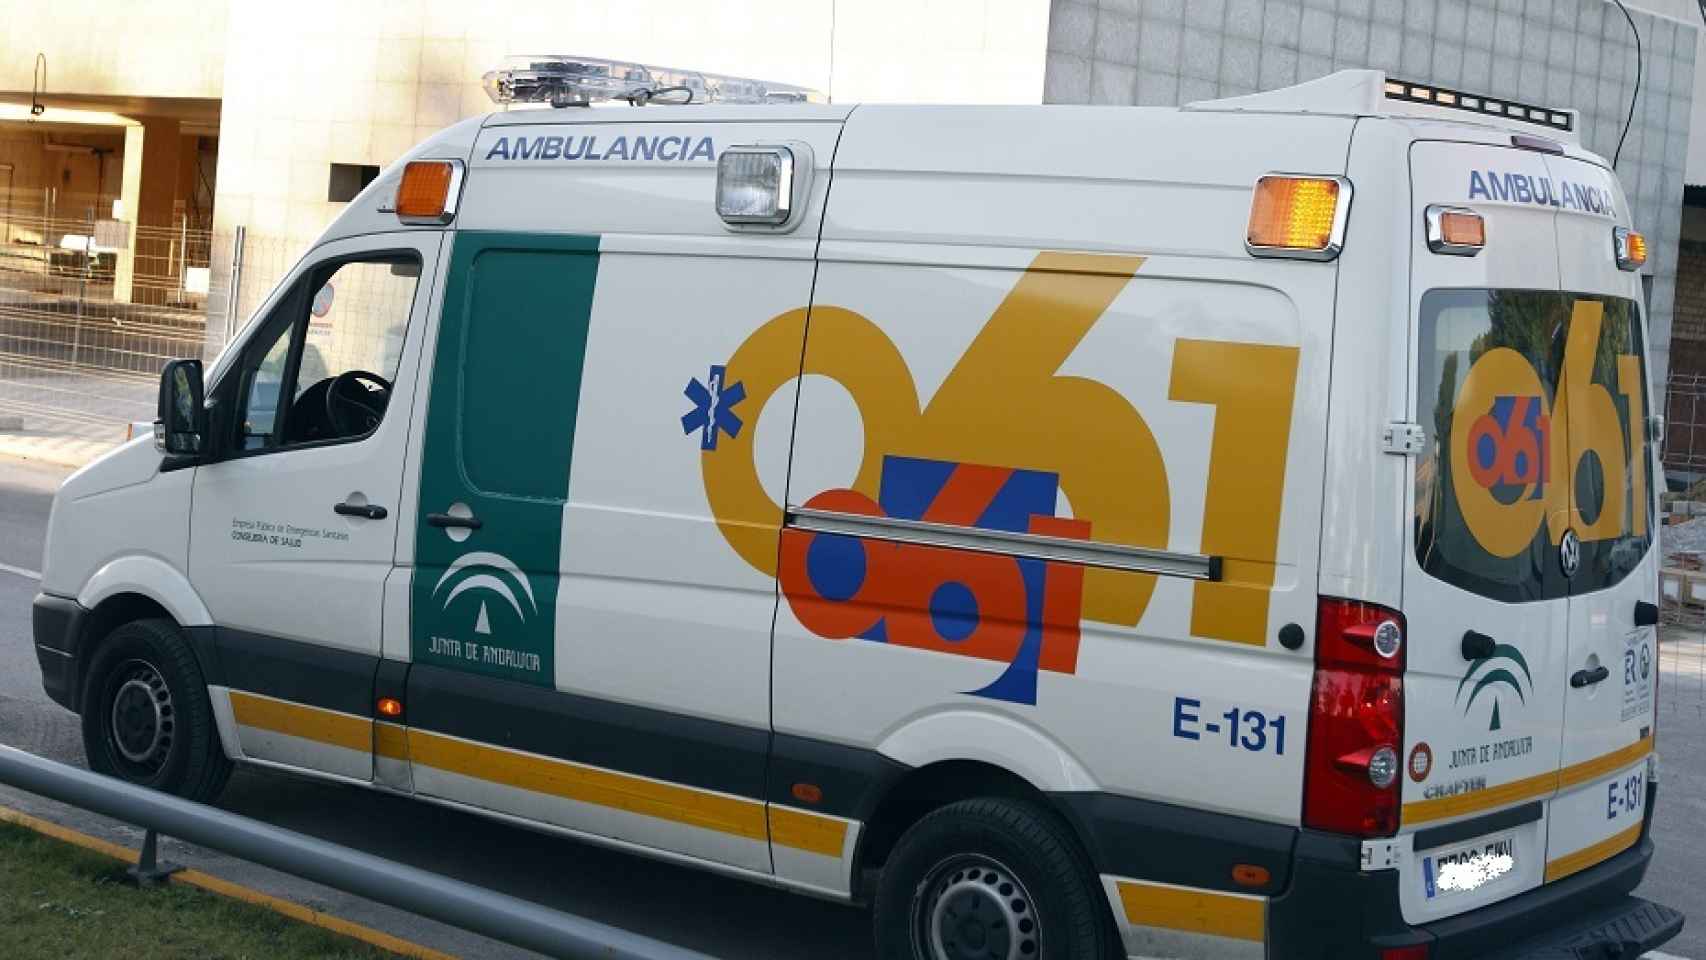 Ambulancia de Emergencias Sanitarias 061 de Andalucía.